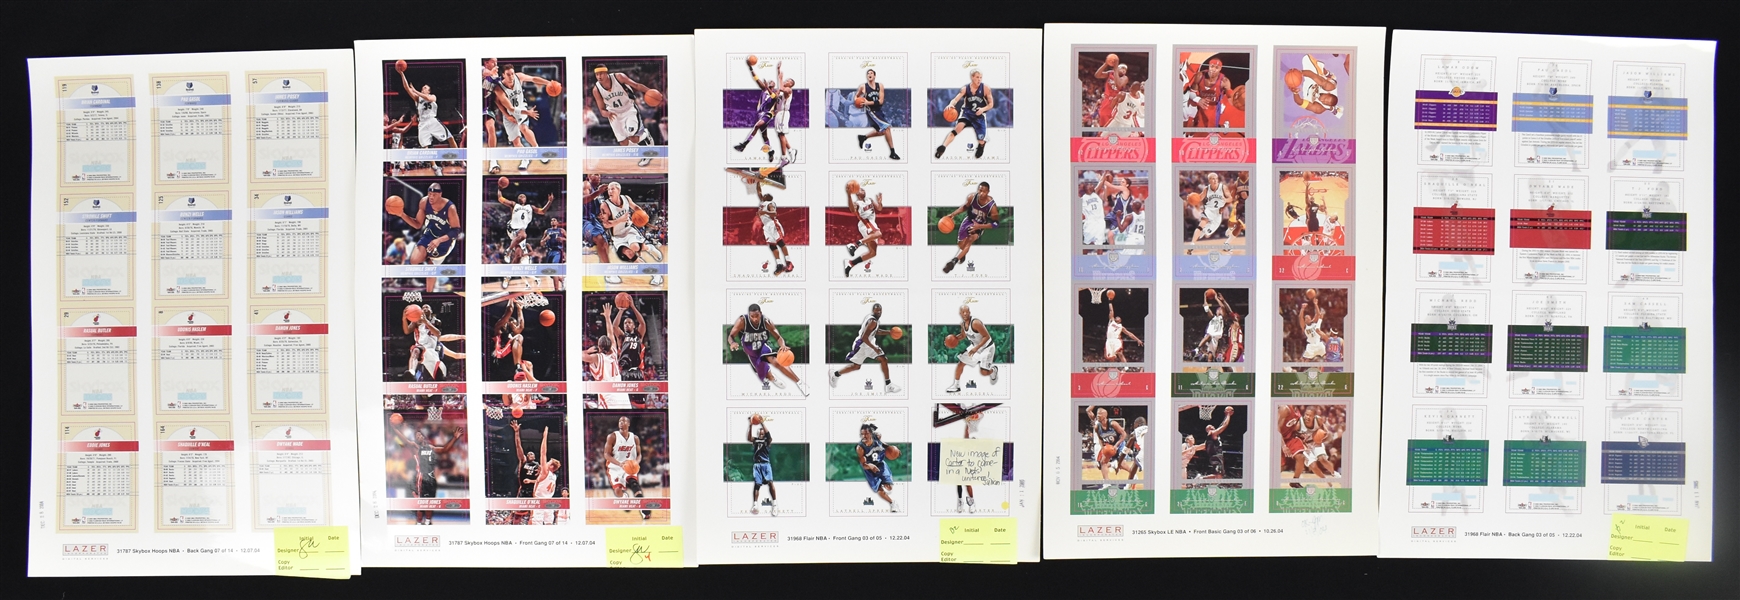 NBA Fleer Basketball Card Uncut Proof Sheets w/Kobe Bryant